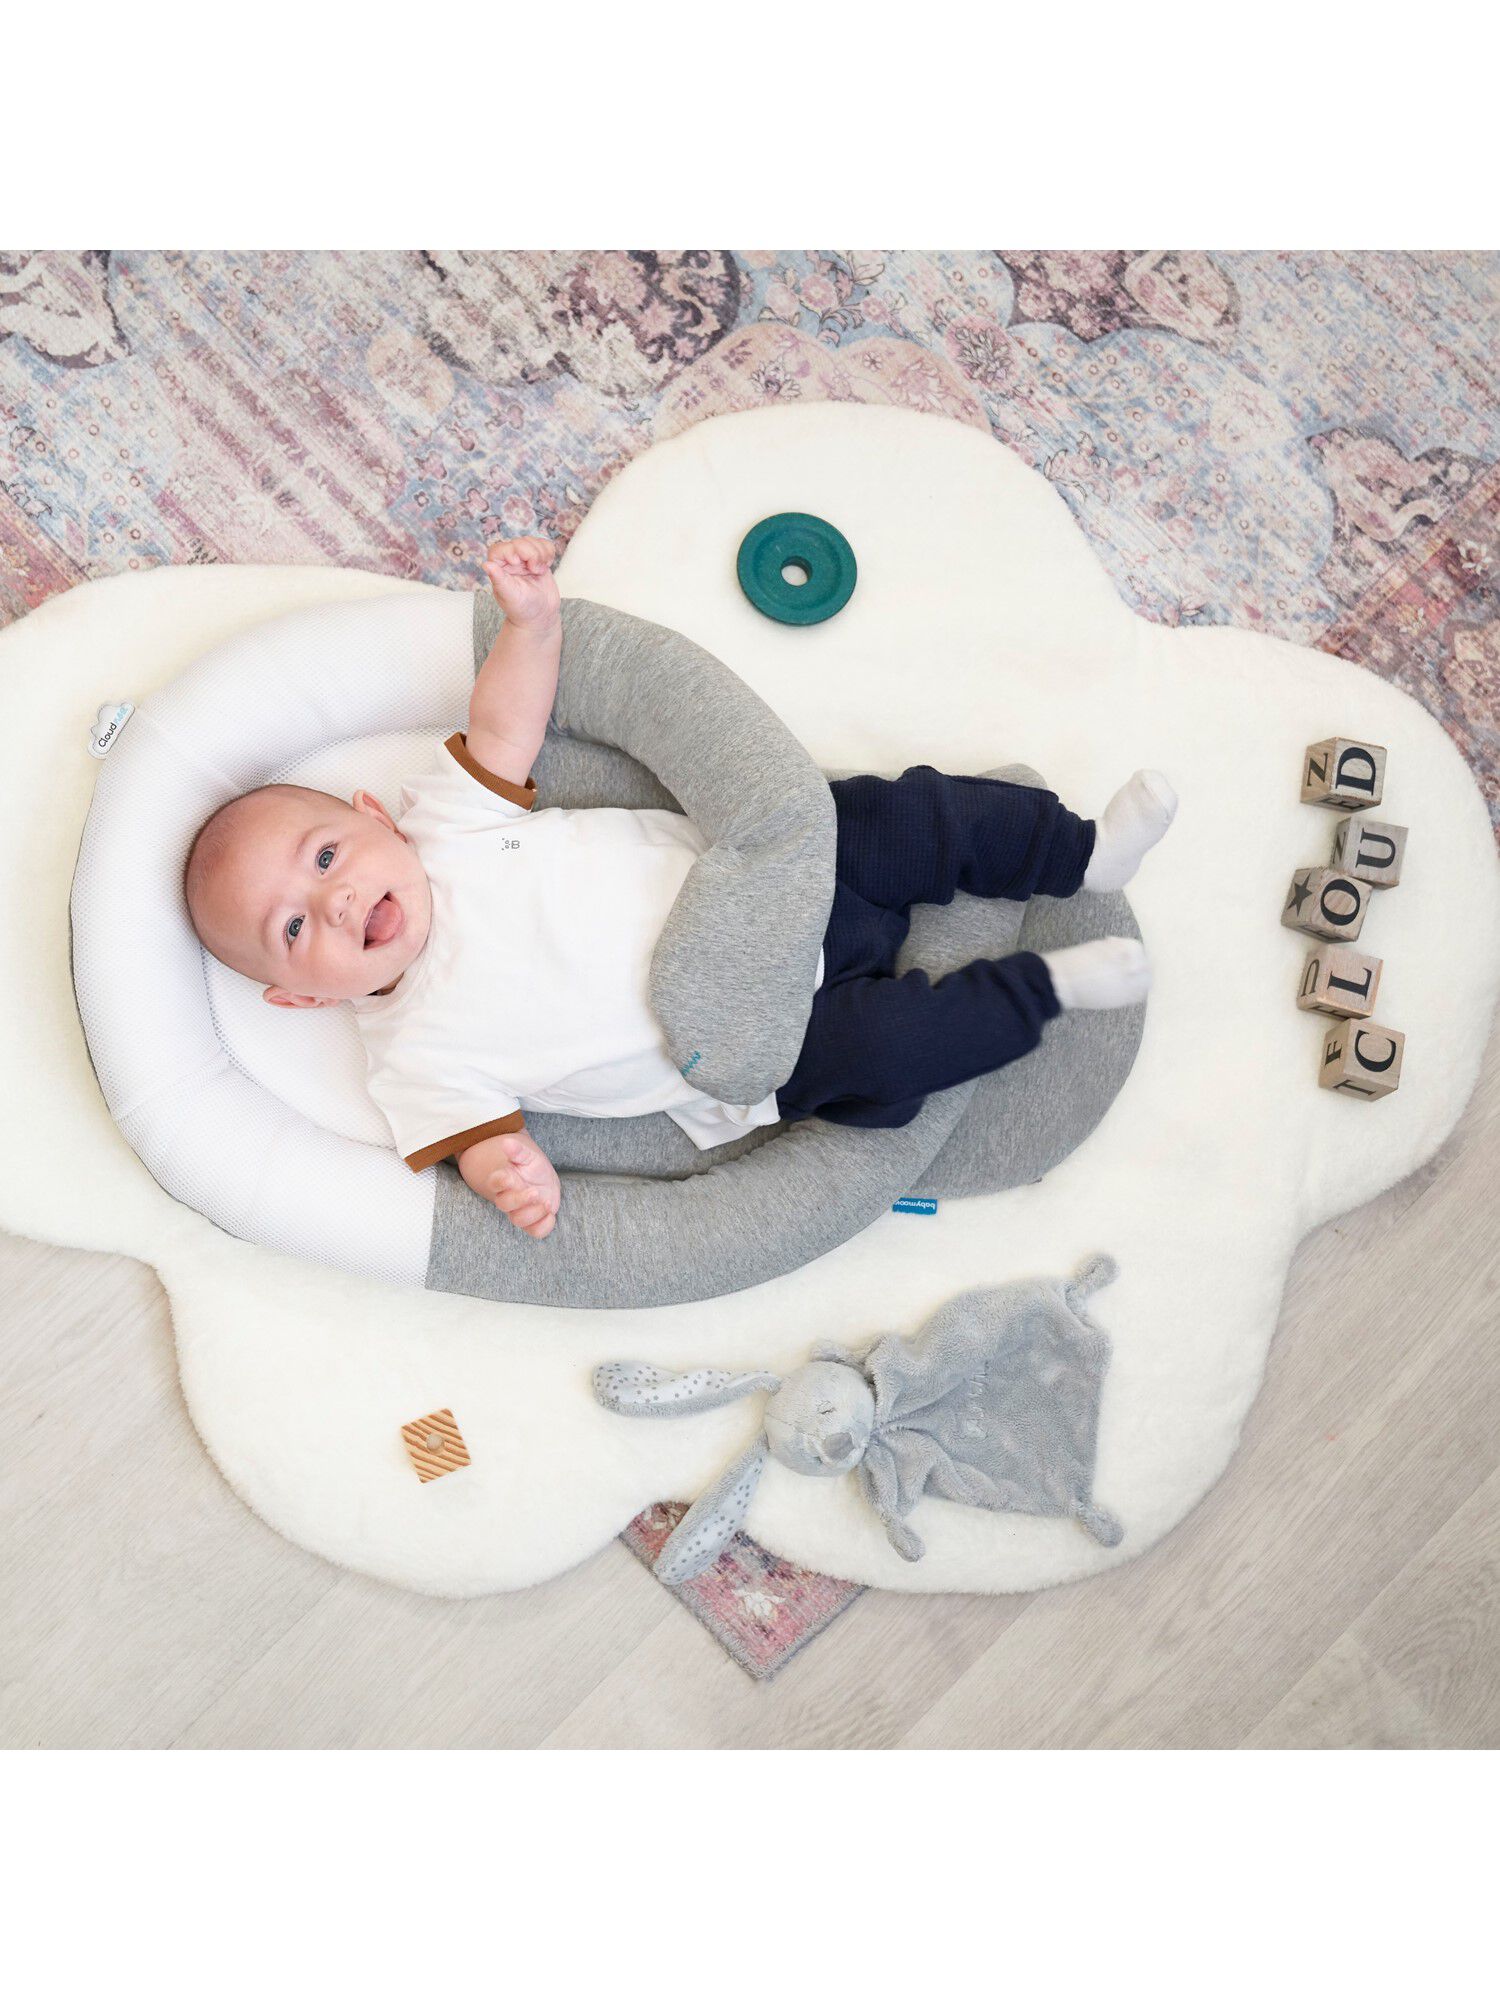 preliked Infant Nursing Pillow Baby Support Seat Chair Feeding Safety Sofa Plush Toy Gift Milk White 